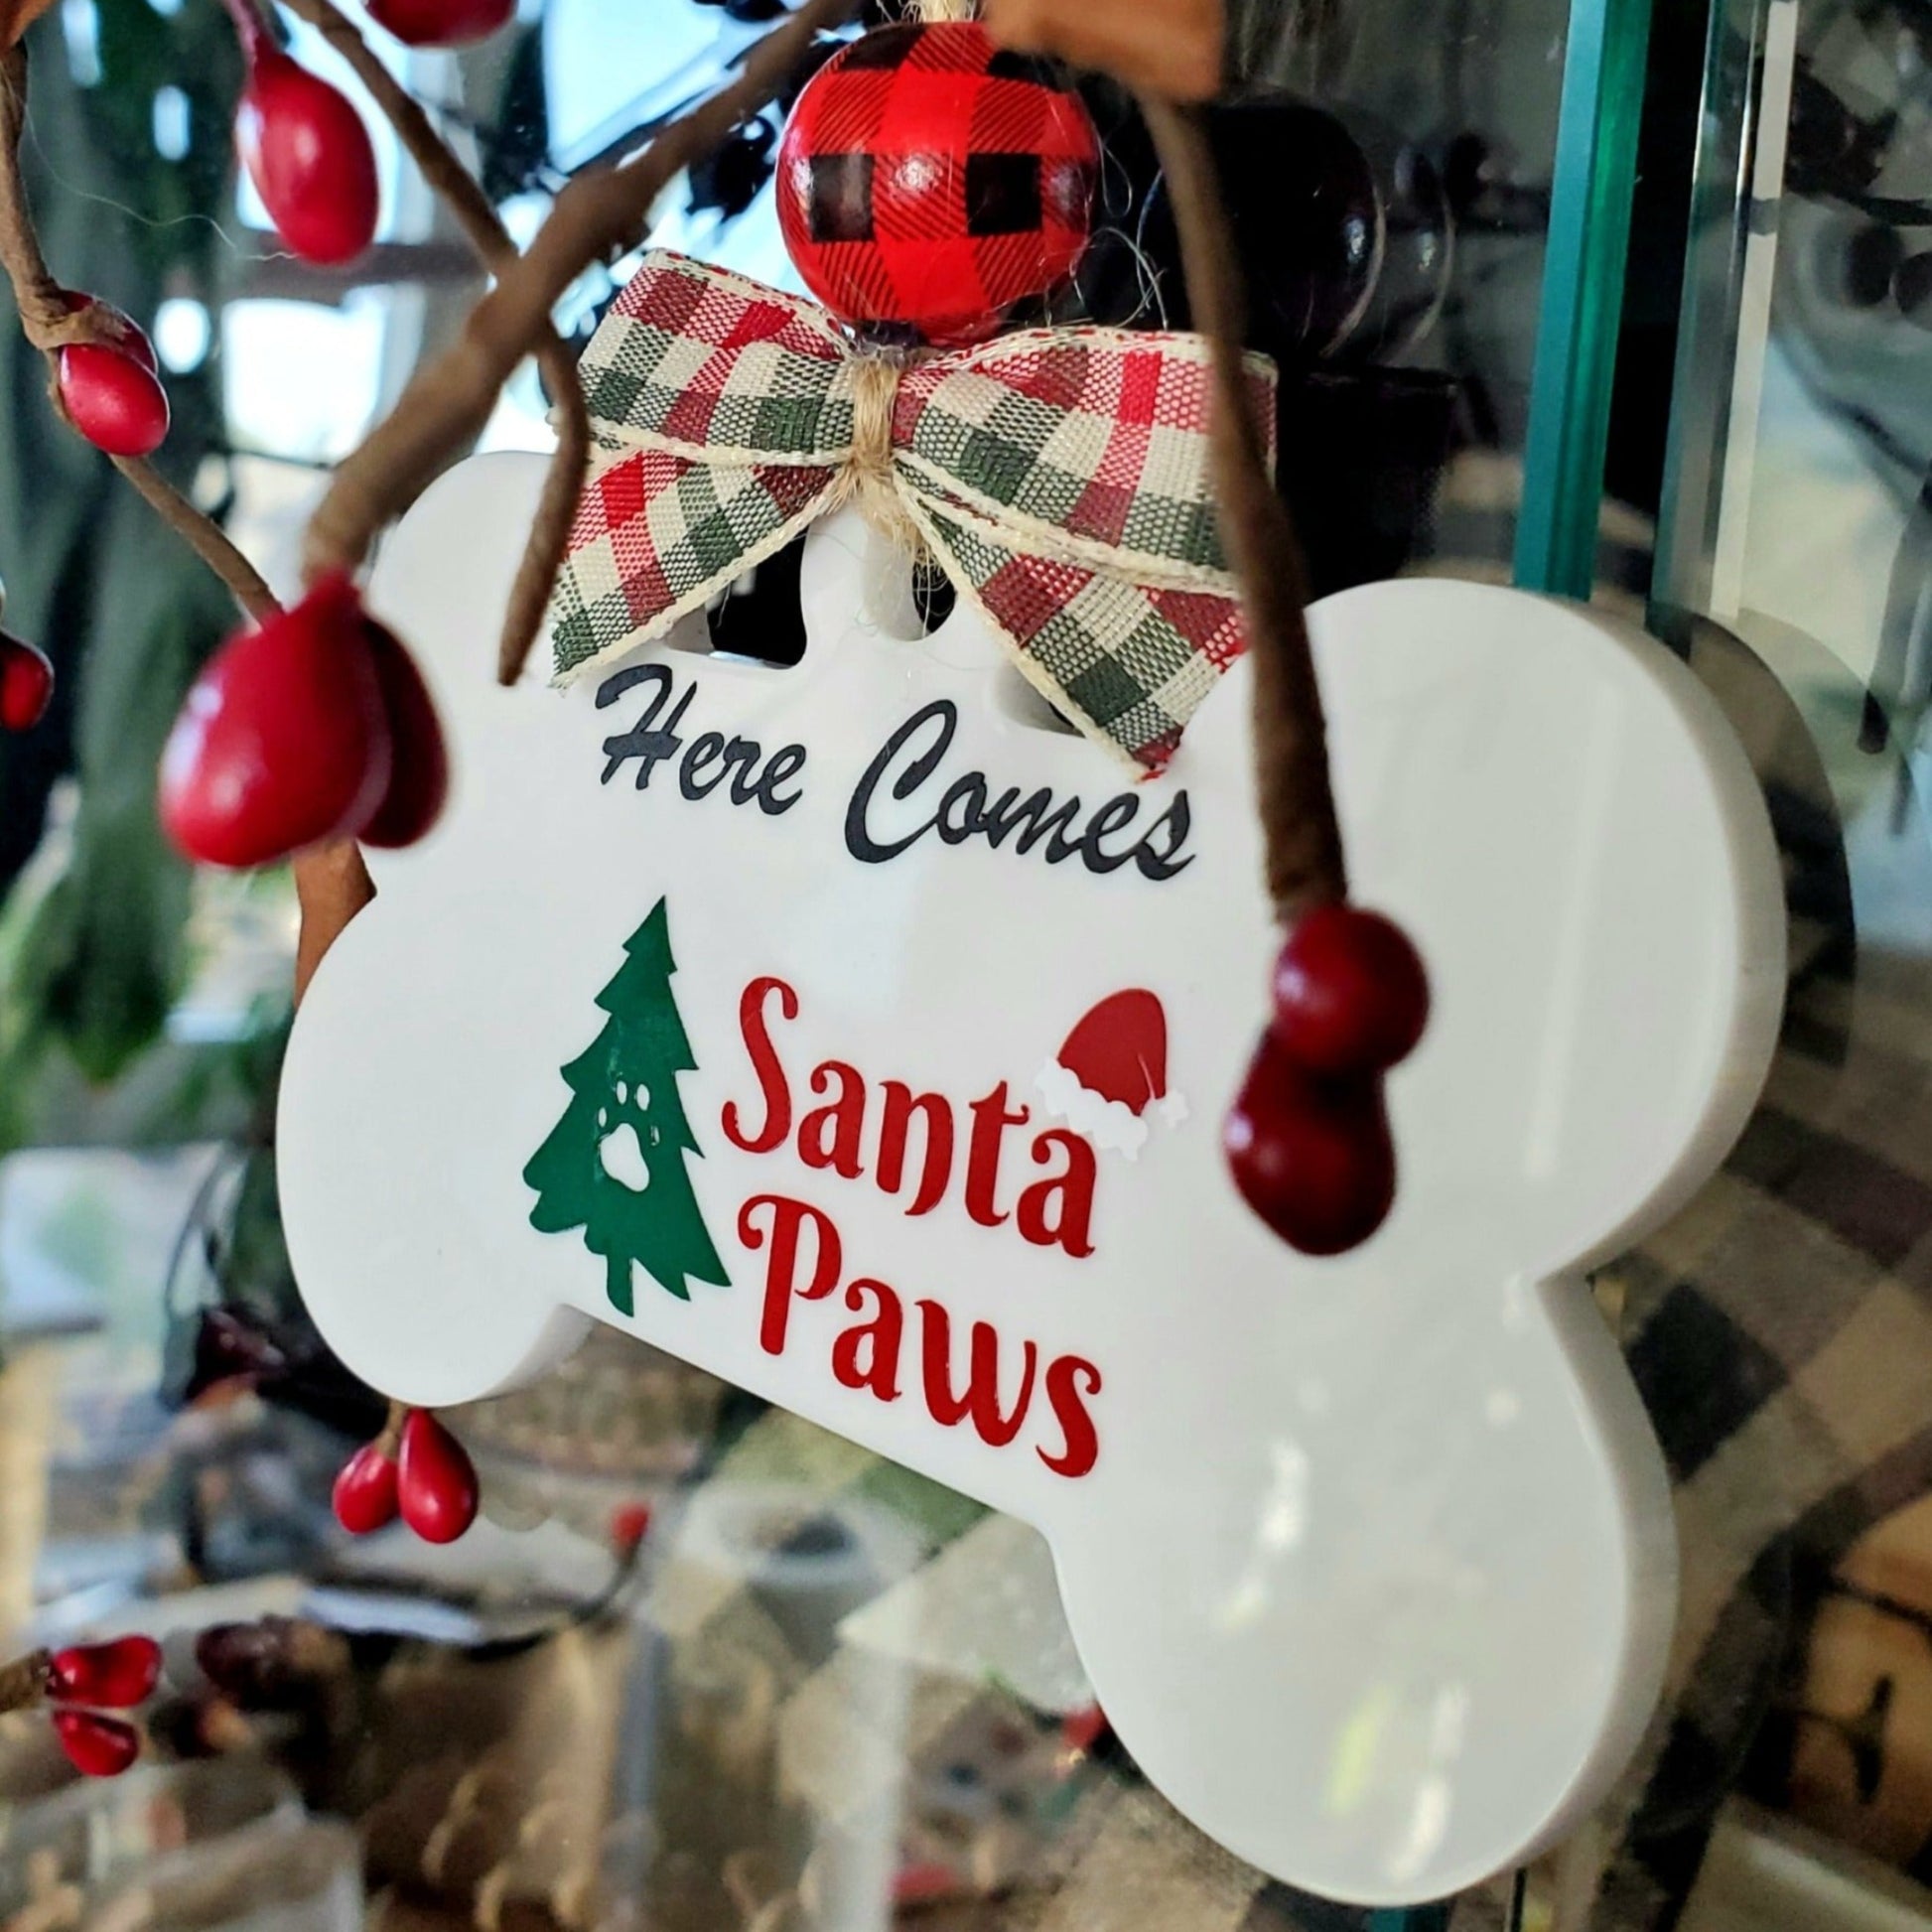 Santa Paws Christmas Ornament